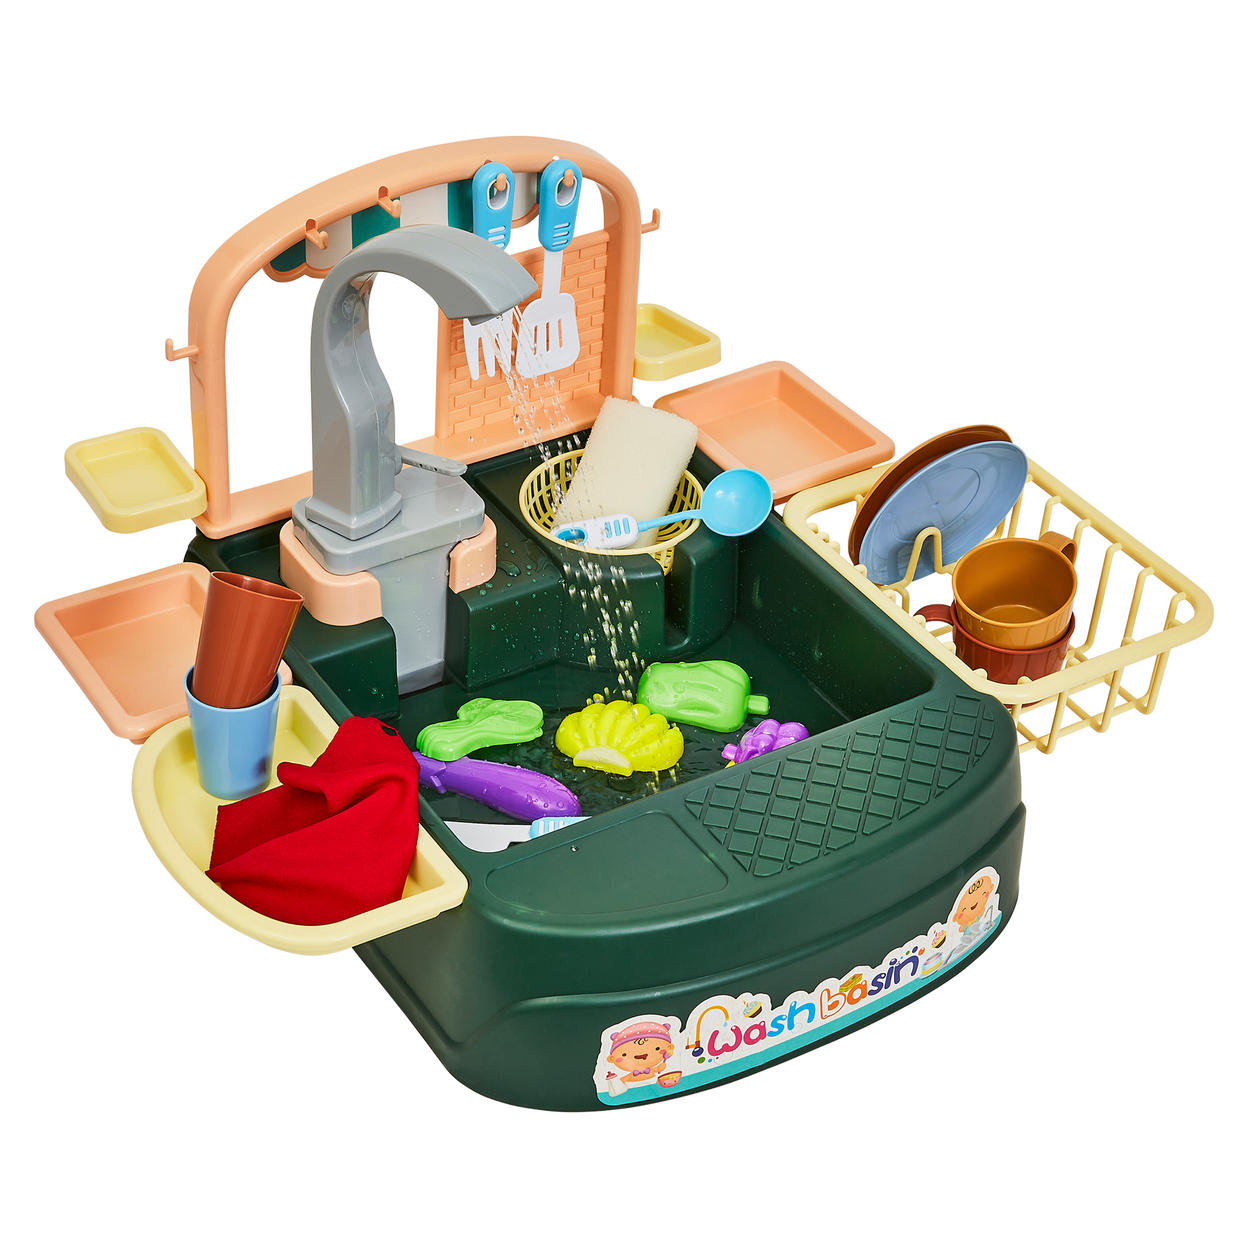 Play Kitchen Set For Kids Sink Water Toy Cycling System Dishwashing Playset